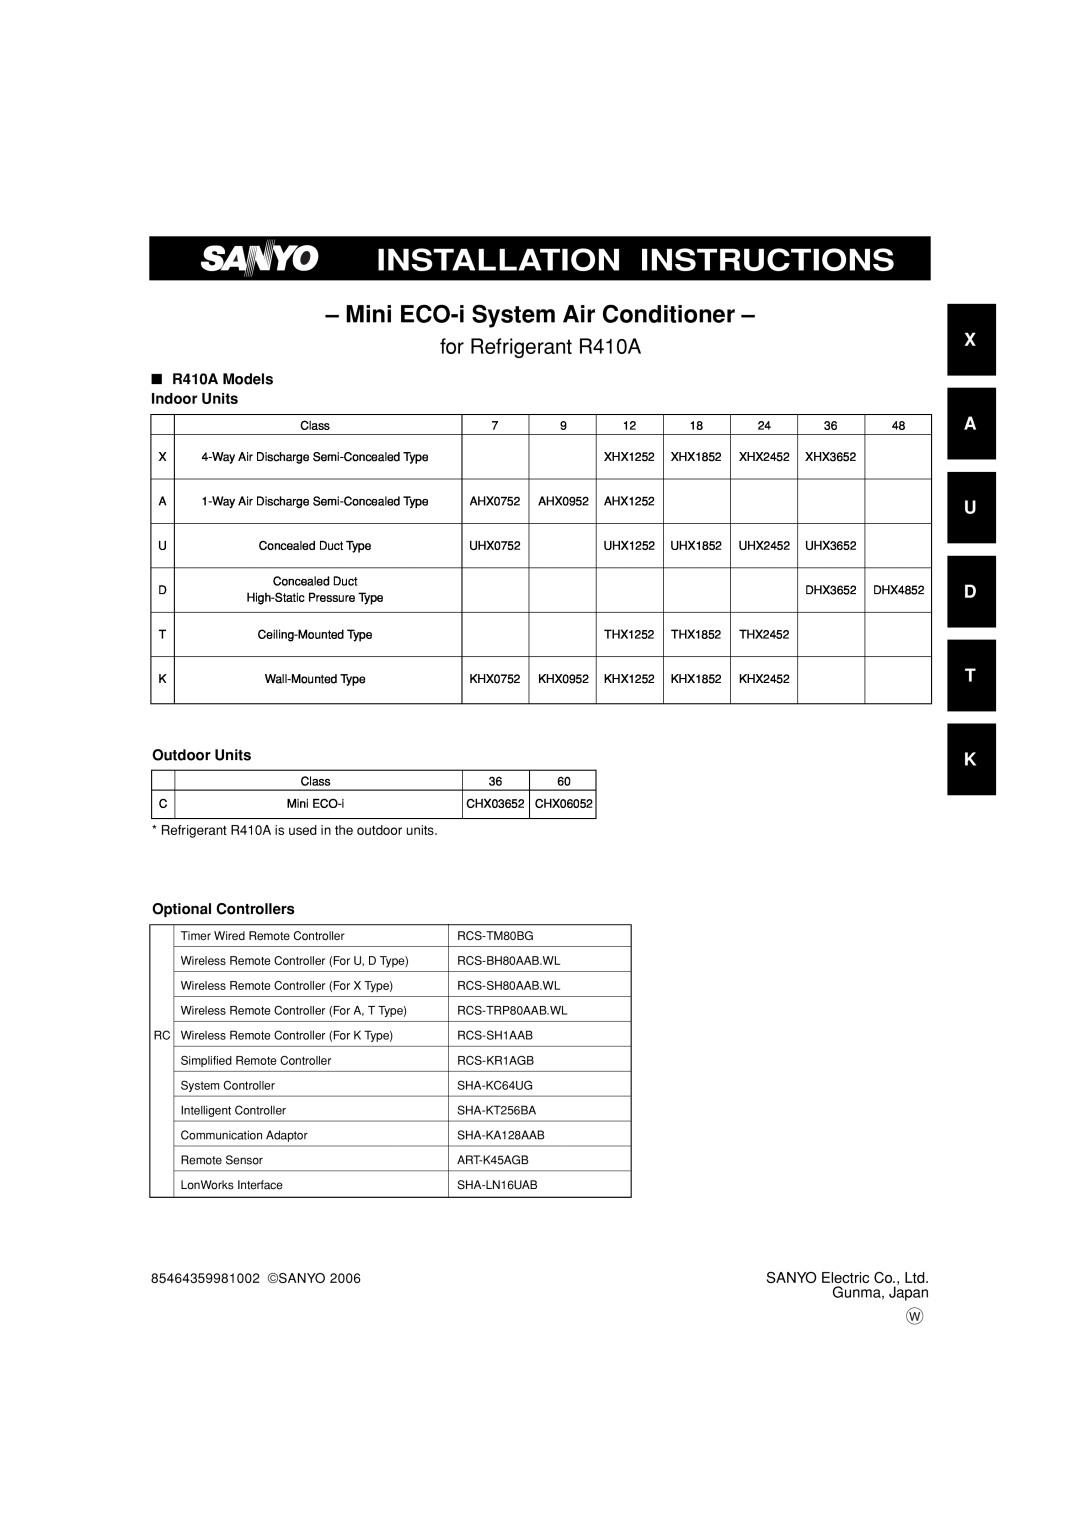 Sanyo 85464359981002 installation instructions X A U D T K, R410A Models Indoor Units, Outdoor Units, Optional Controllers 